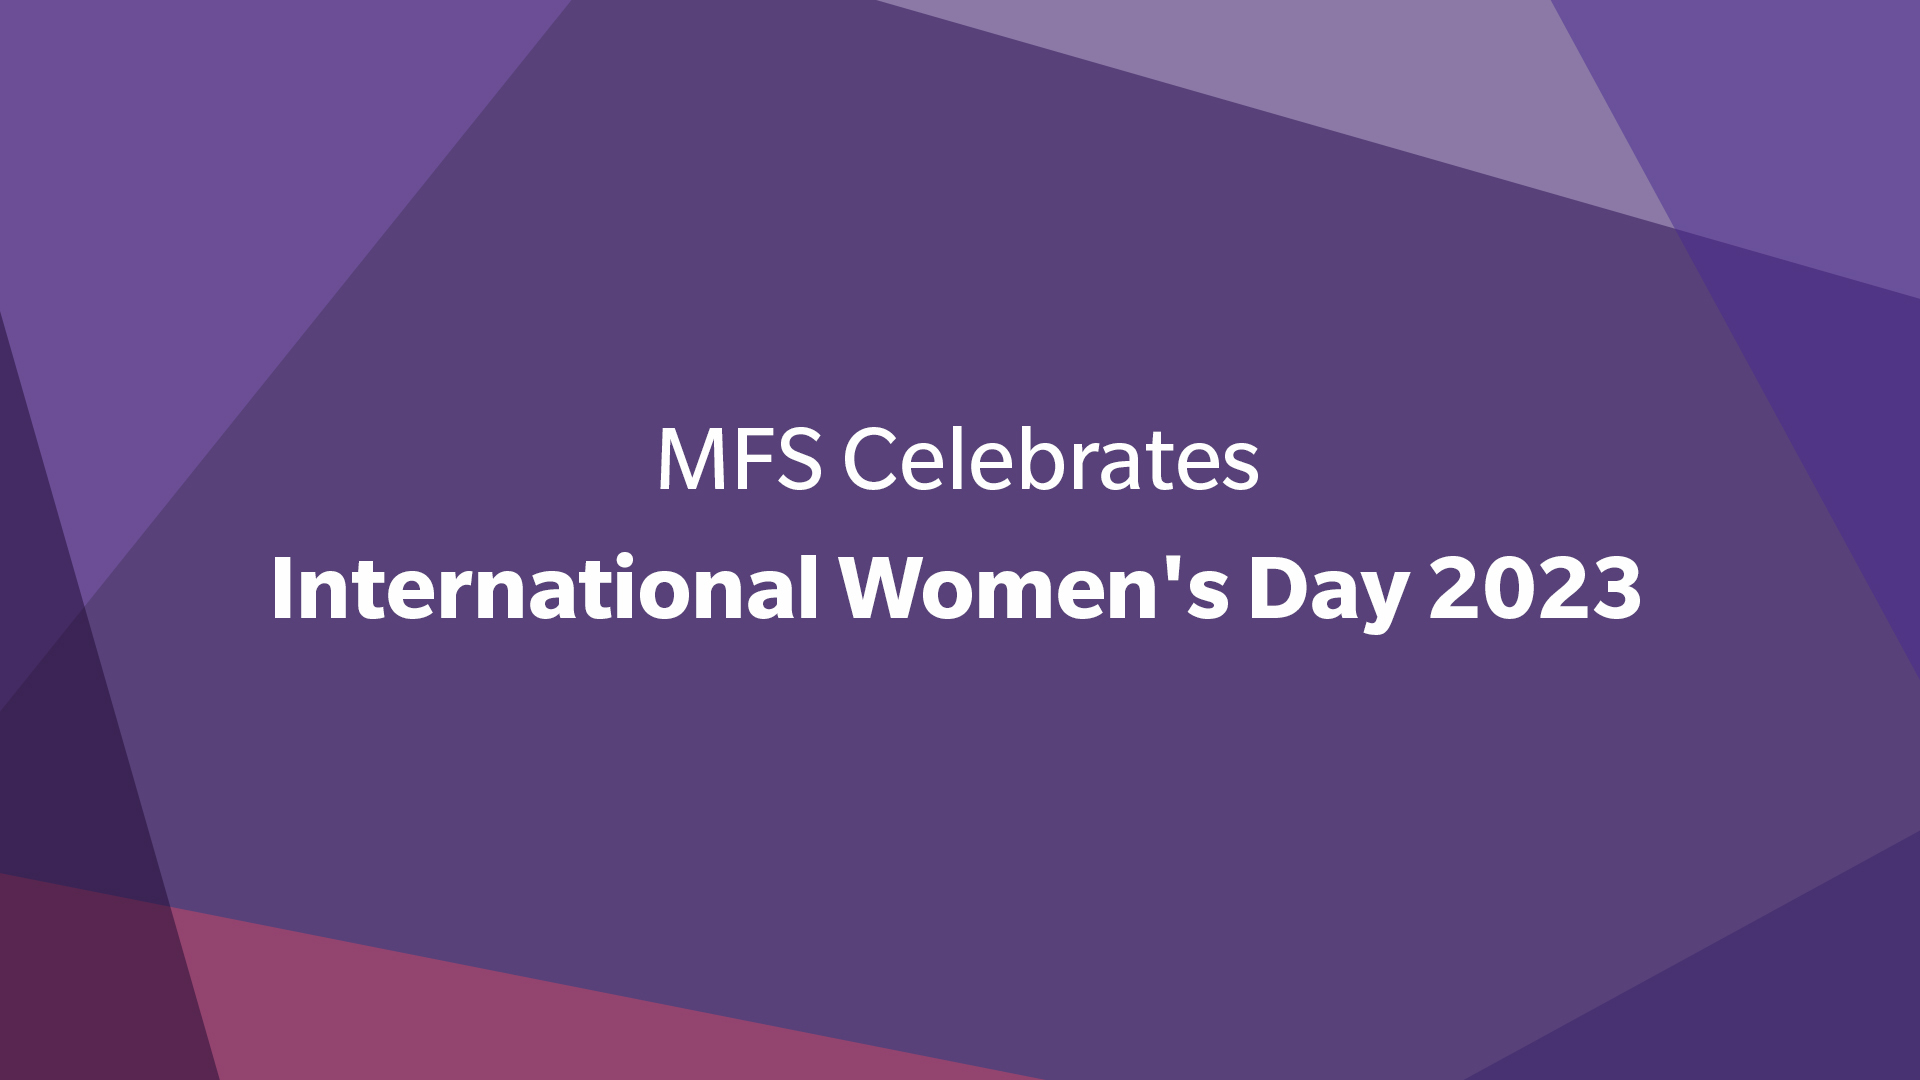 MFS Celebrates International Women’s Day 2023